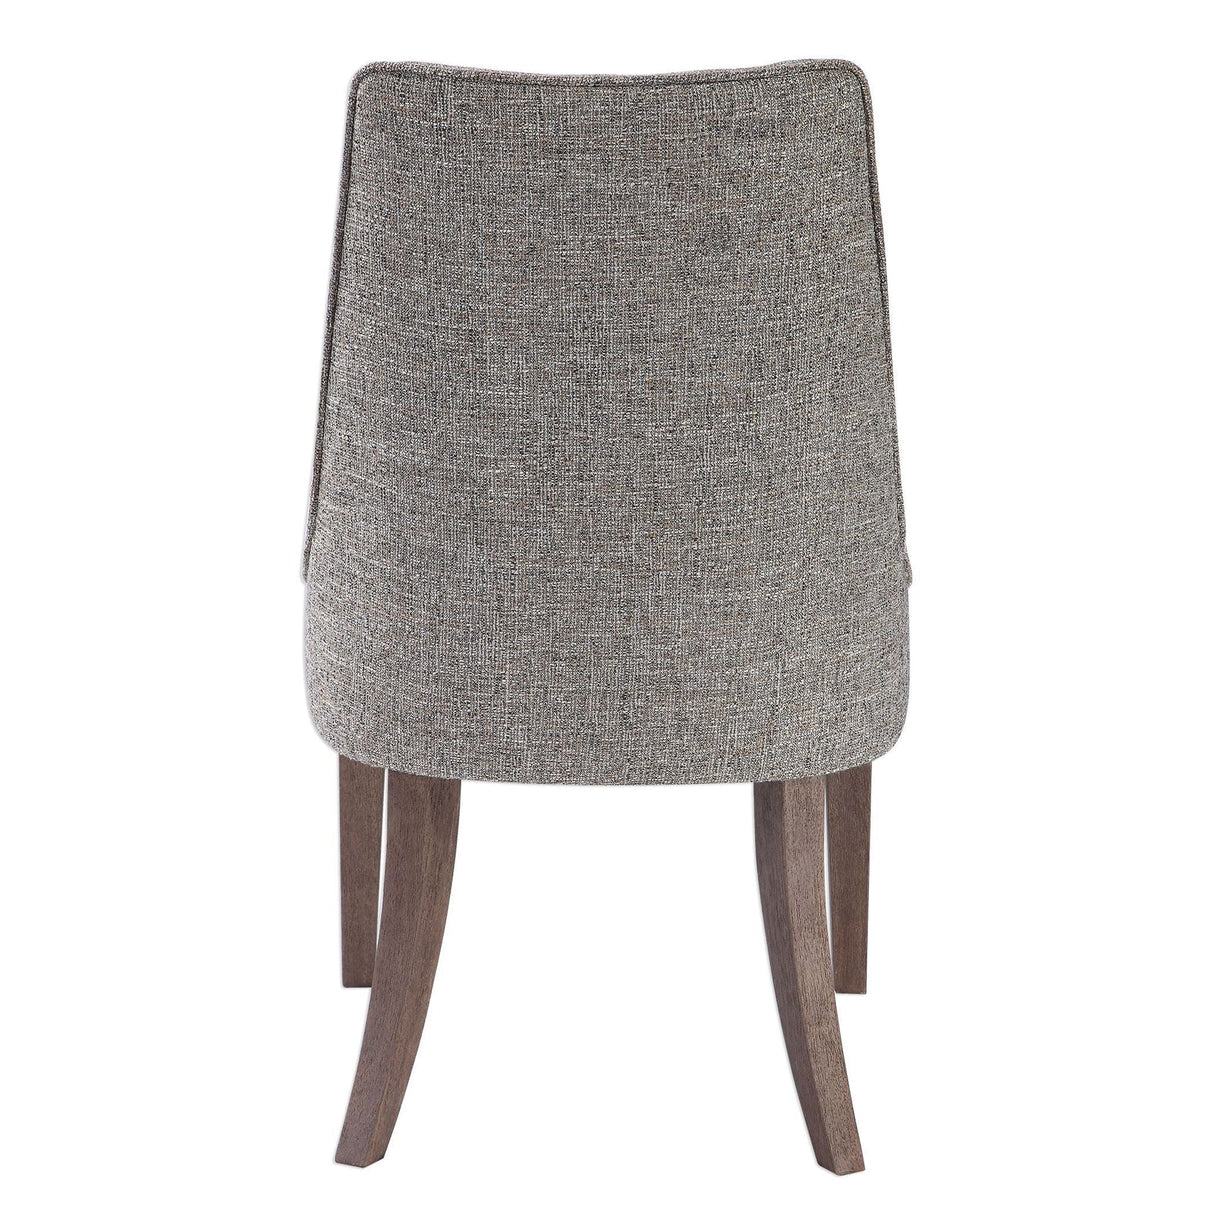 Uttermost Daxton Earth Tone Armless Chair - Home Elegance USA